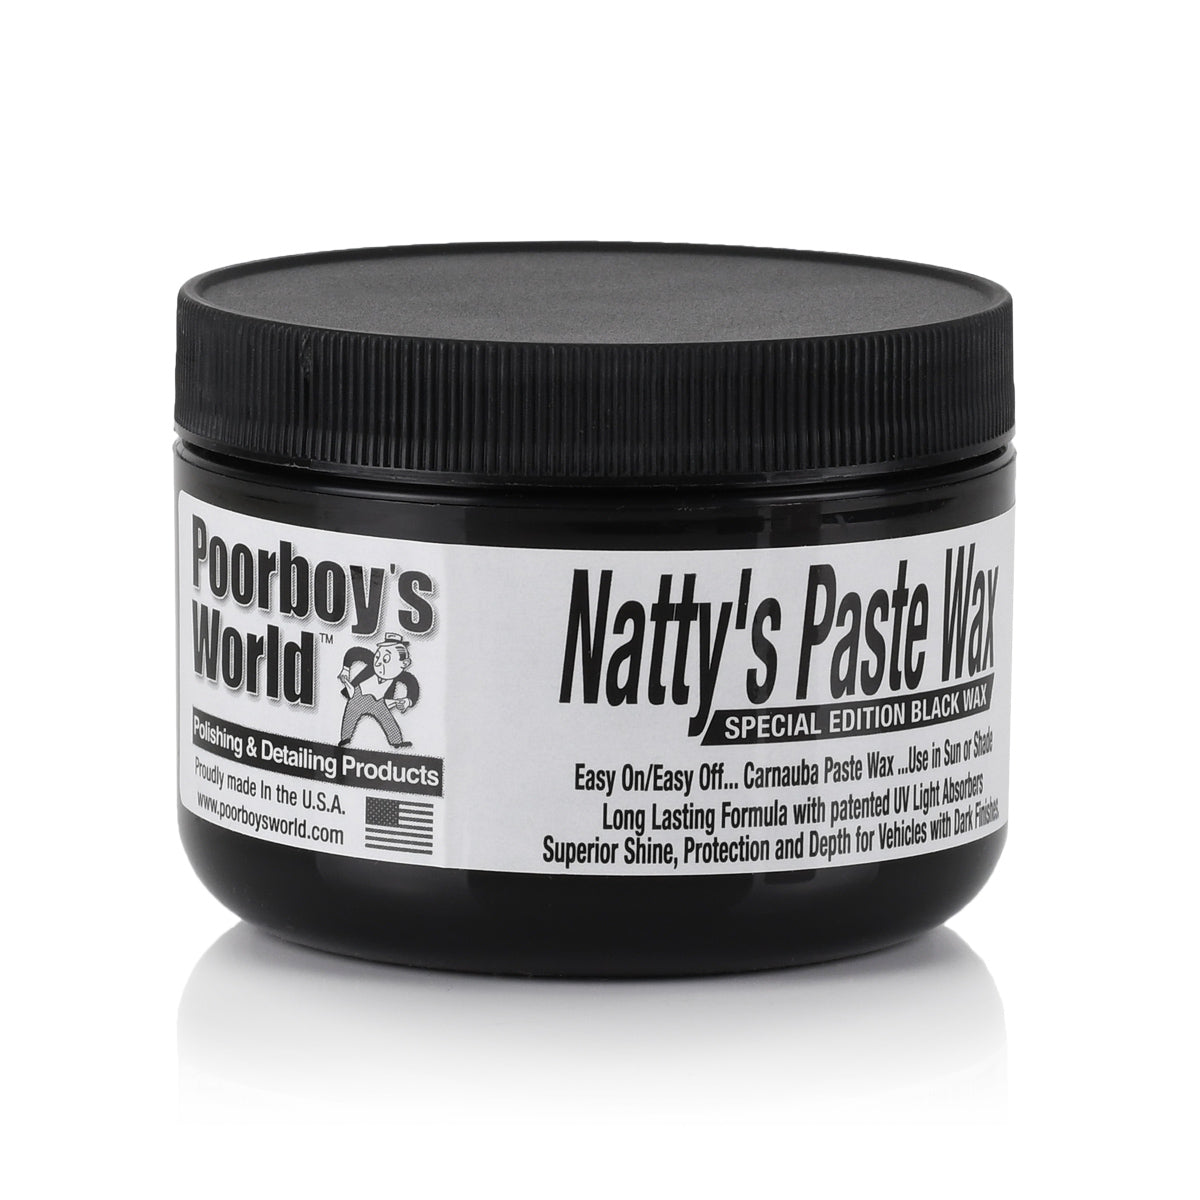 Poorboy's World - Nattys Paste Wax BLACK